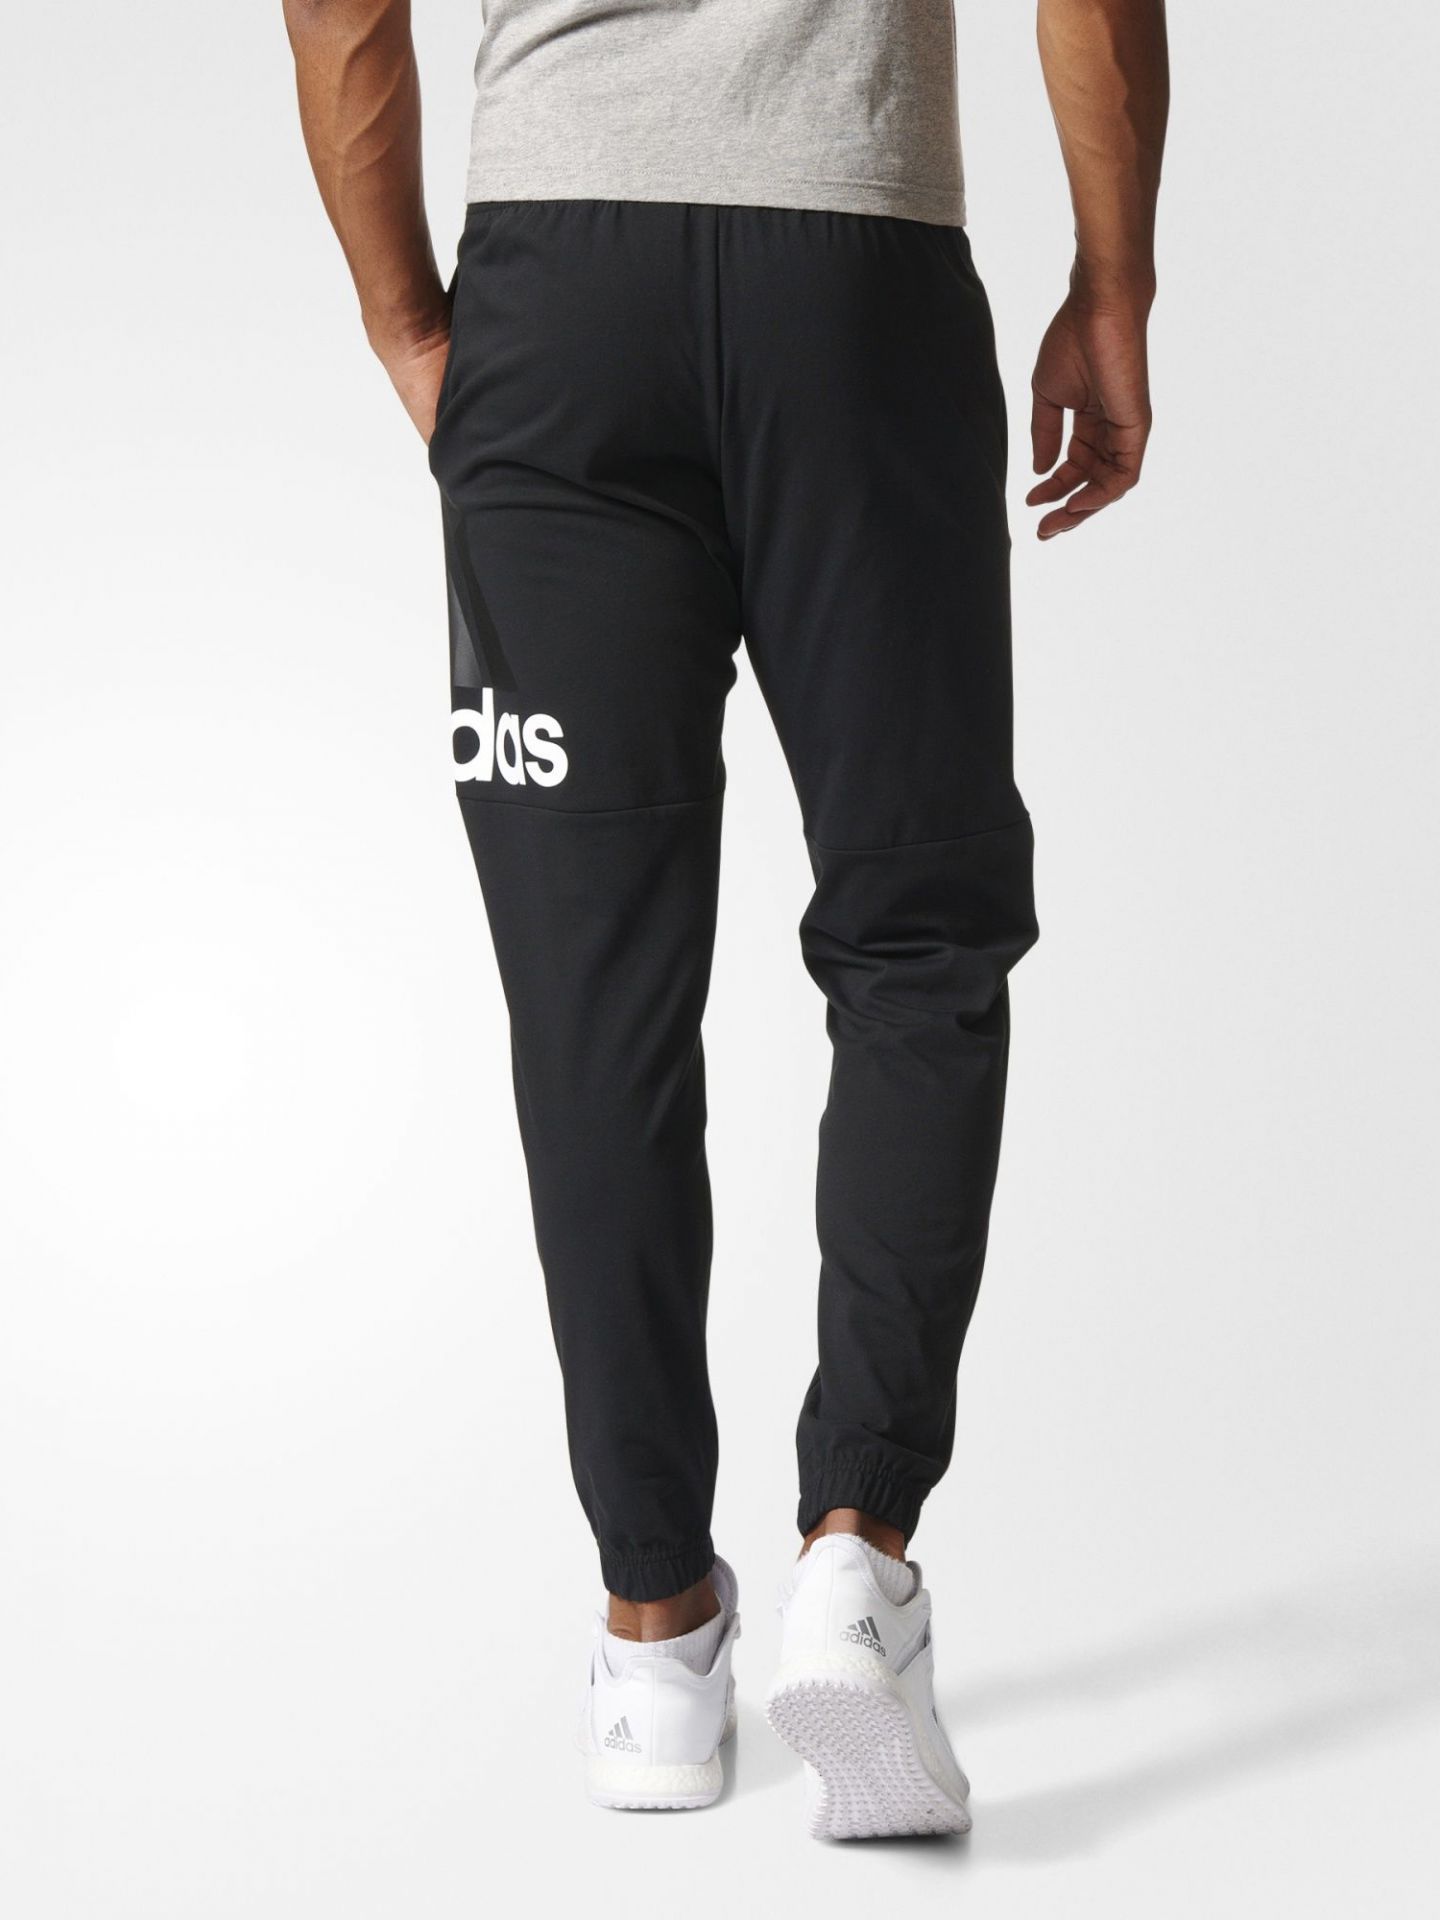 Adidas Men's Essentials Performance Pants B47217 |